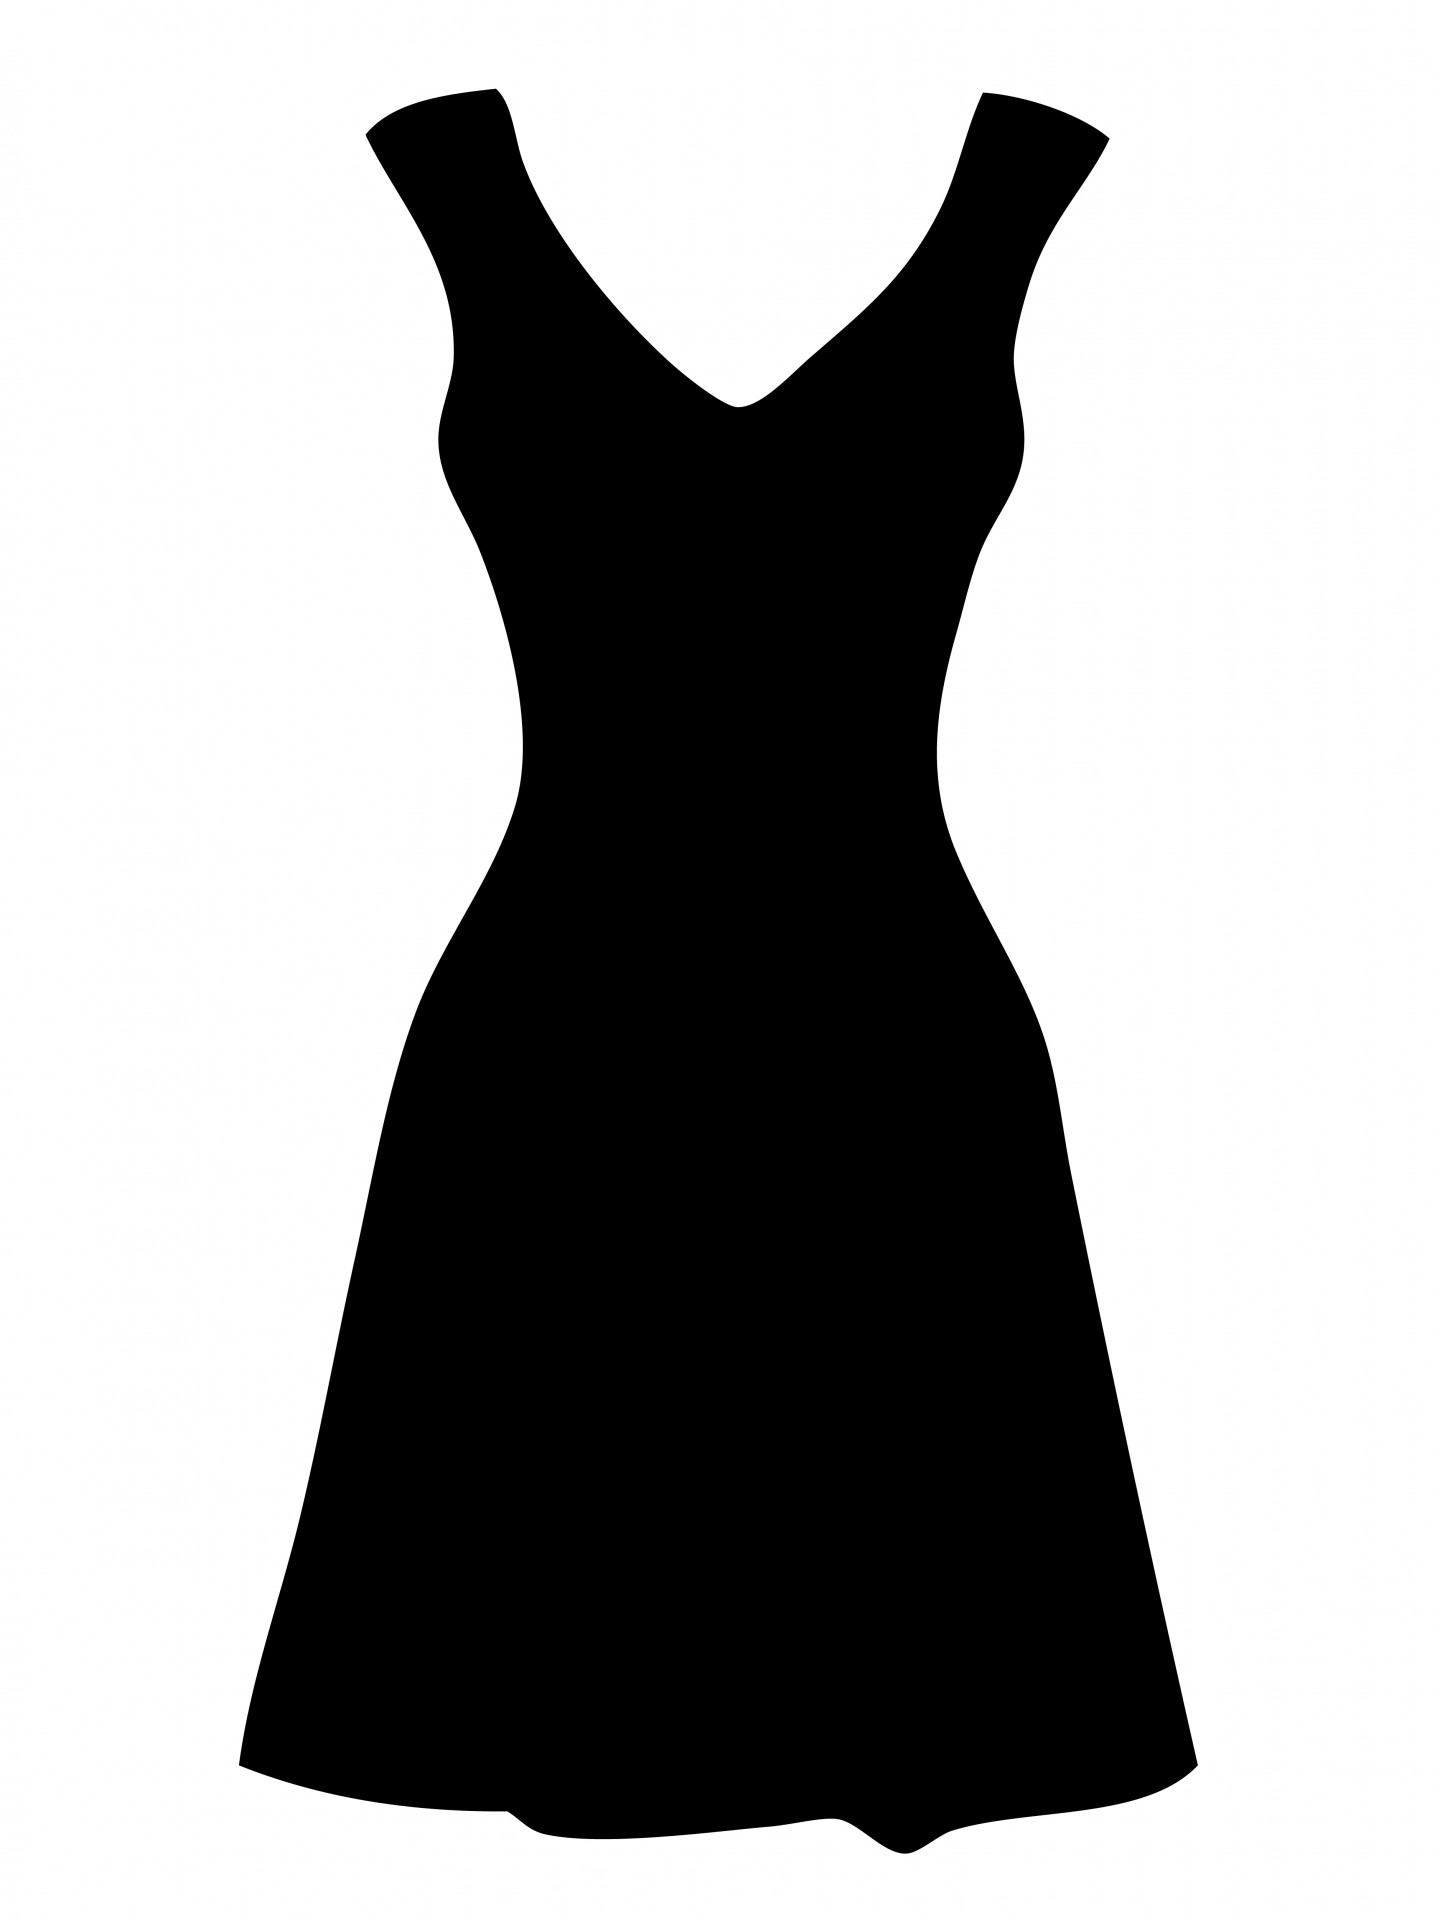 Black dress clip art.